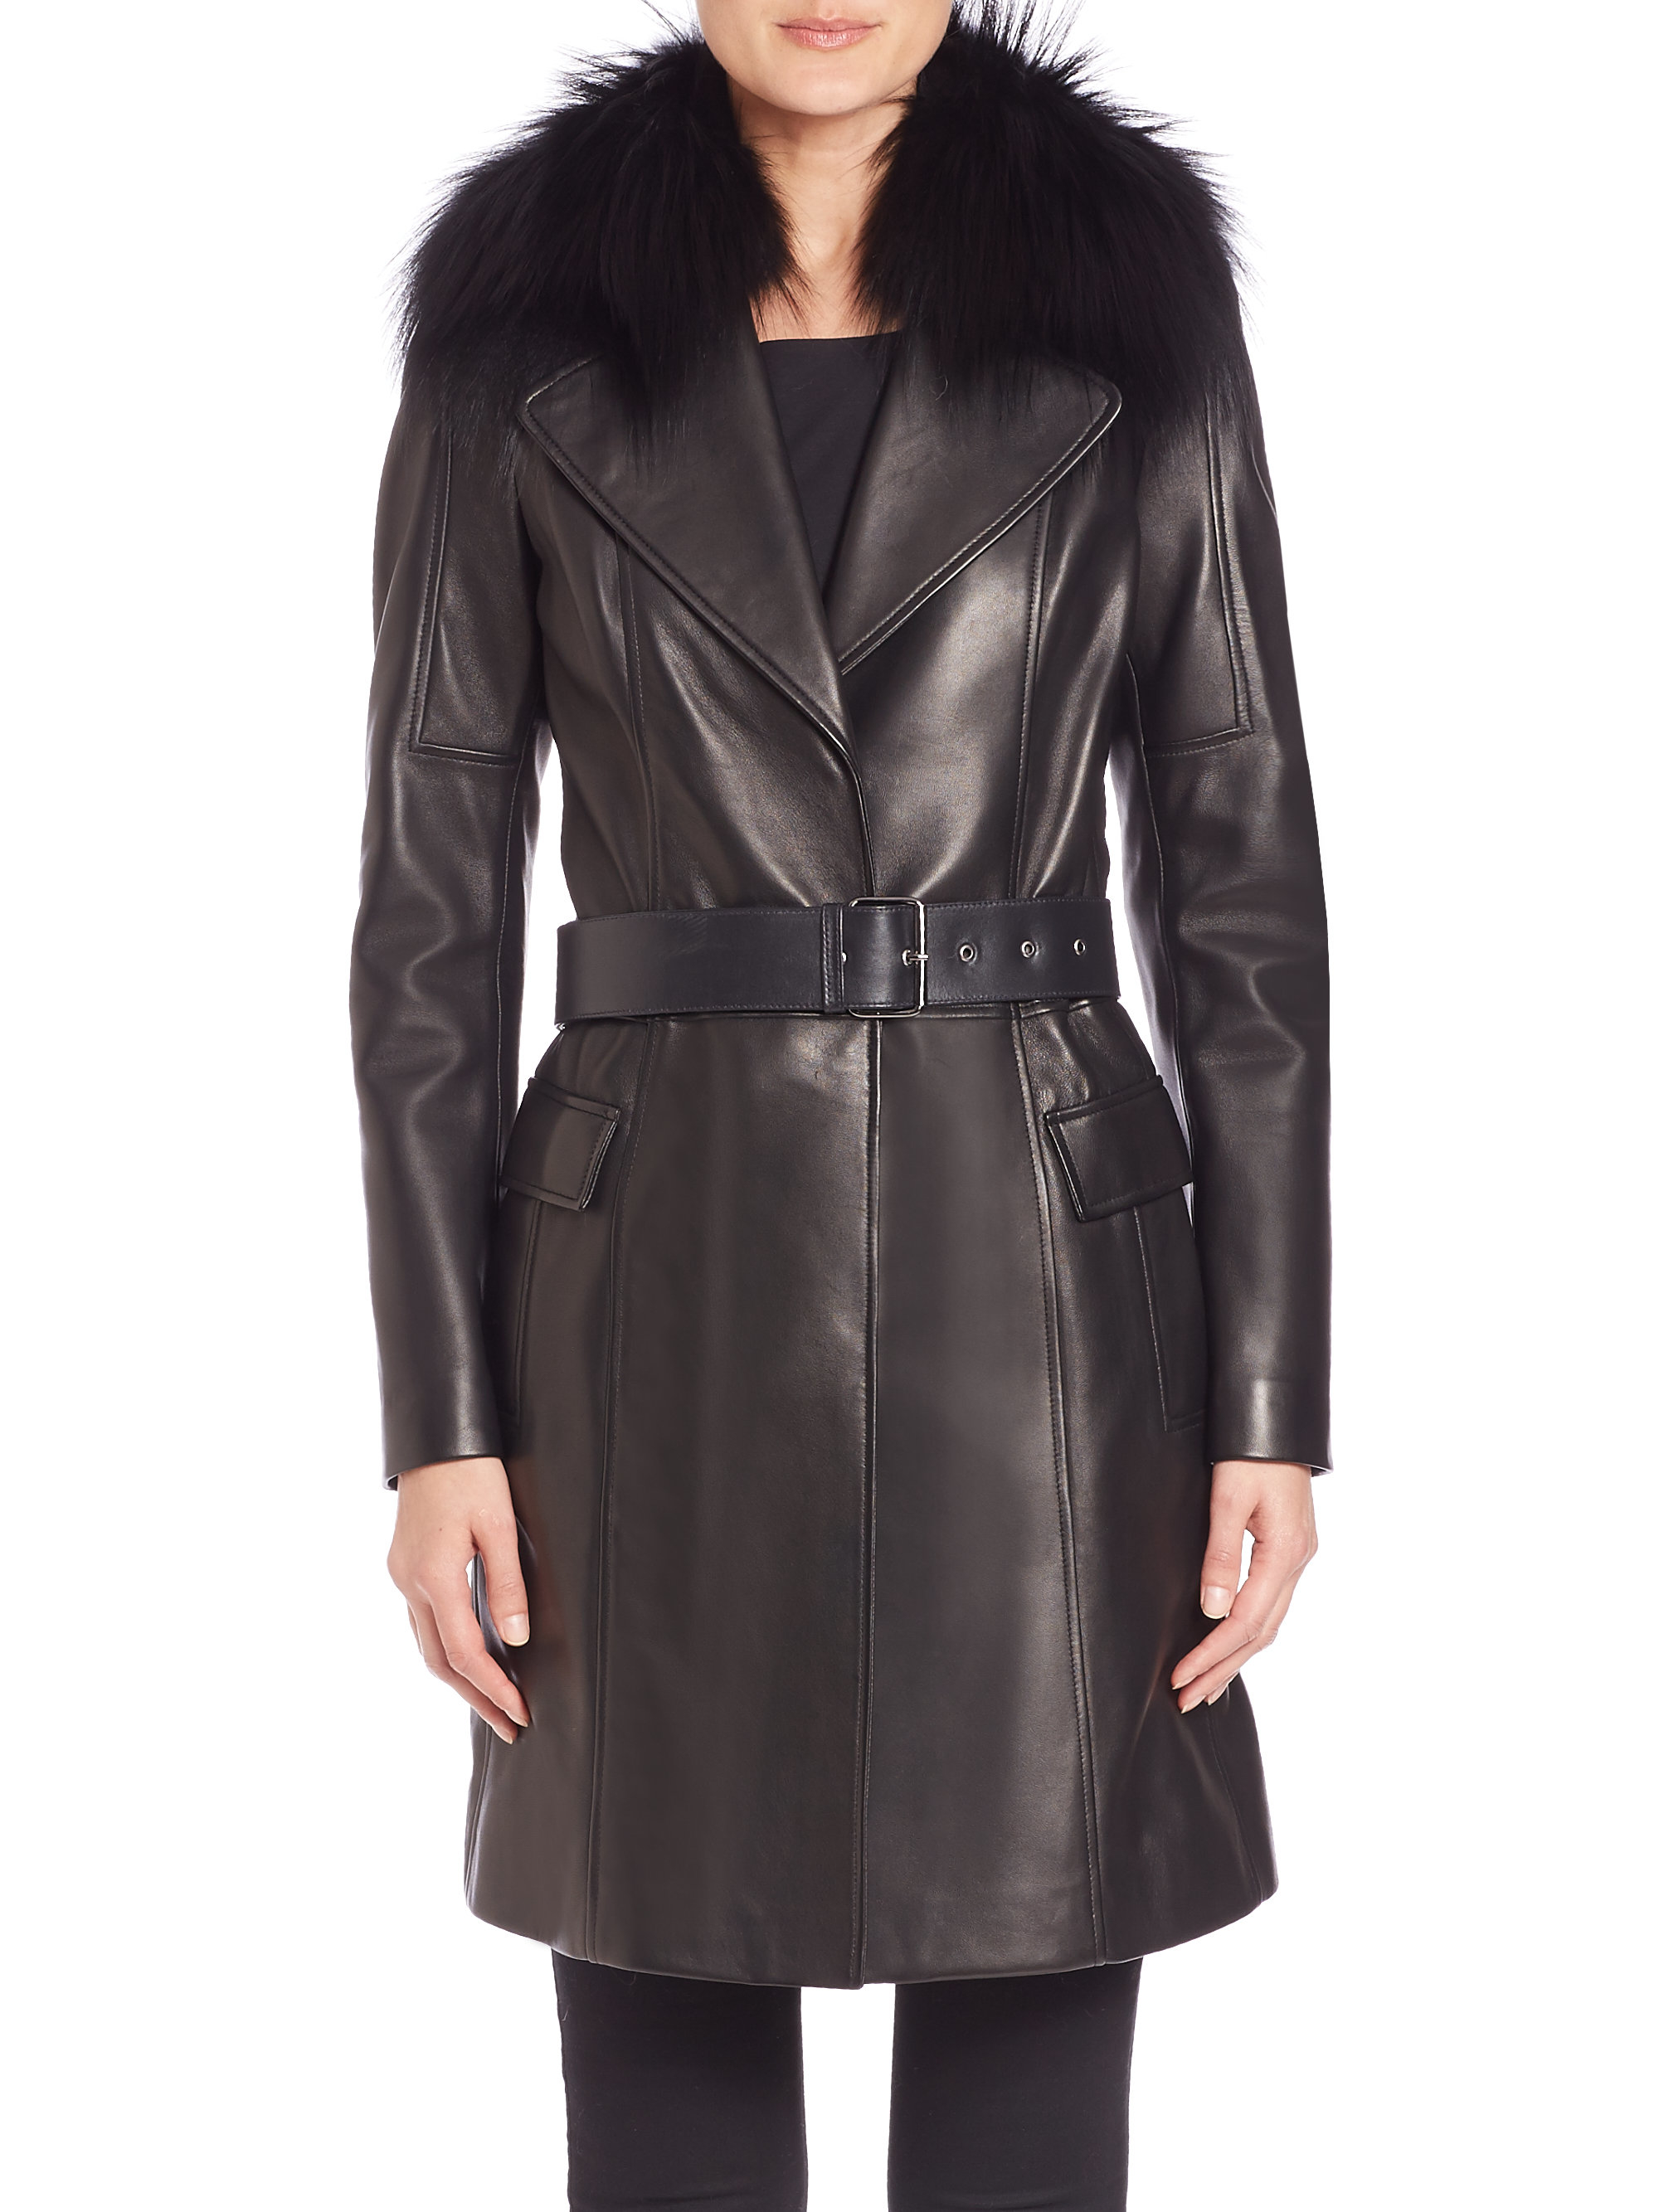 Lyst - Saks Fifth Avenue Fur-collar Leather Coat in Black